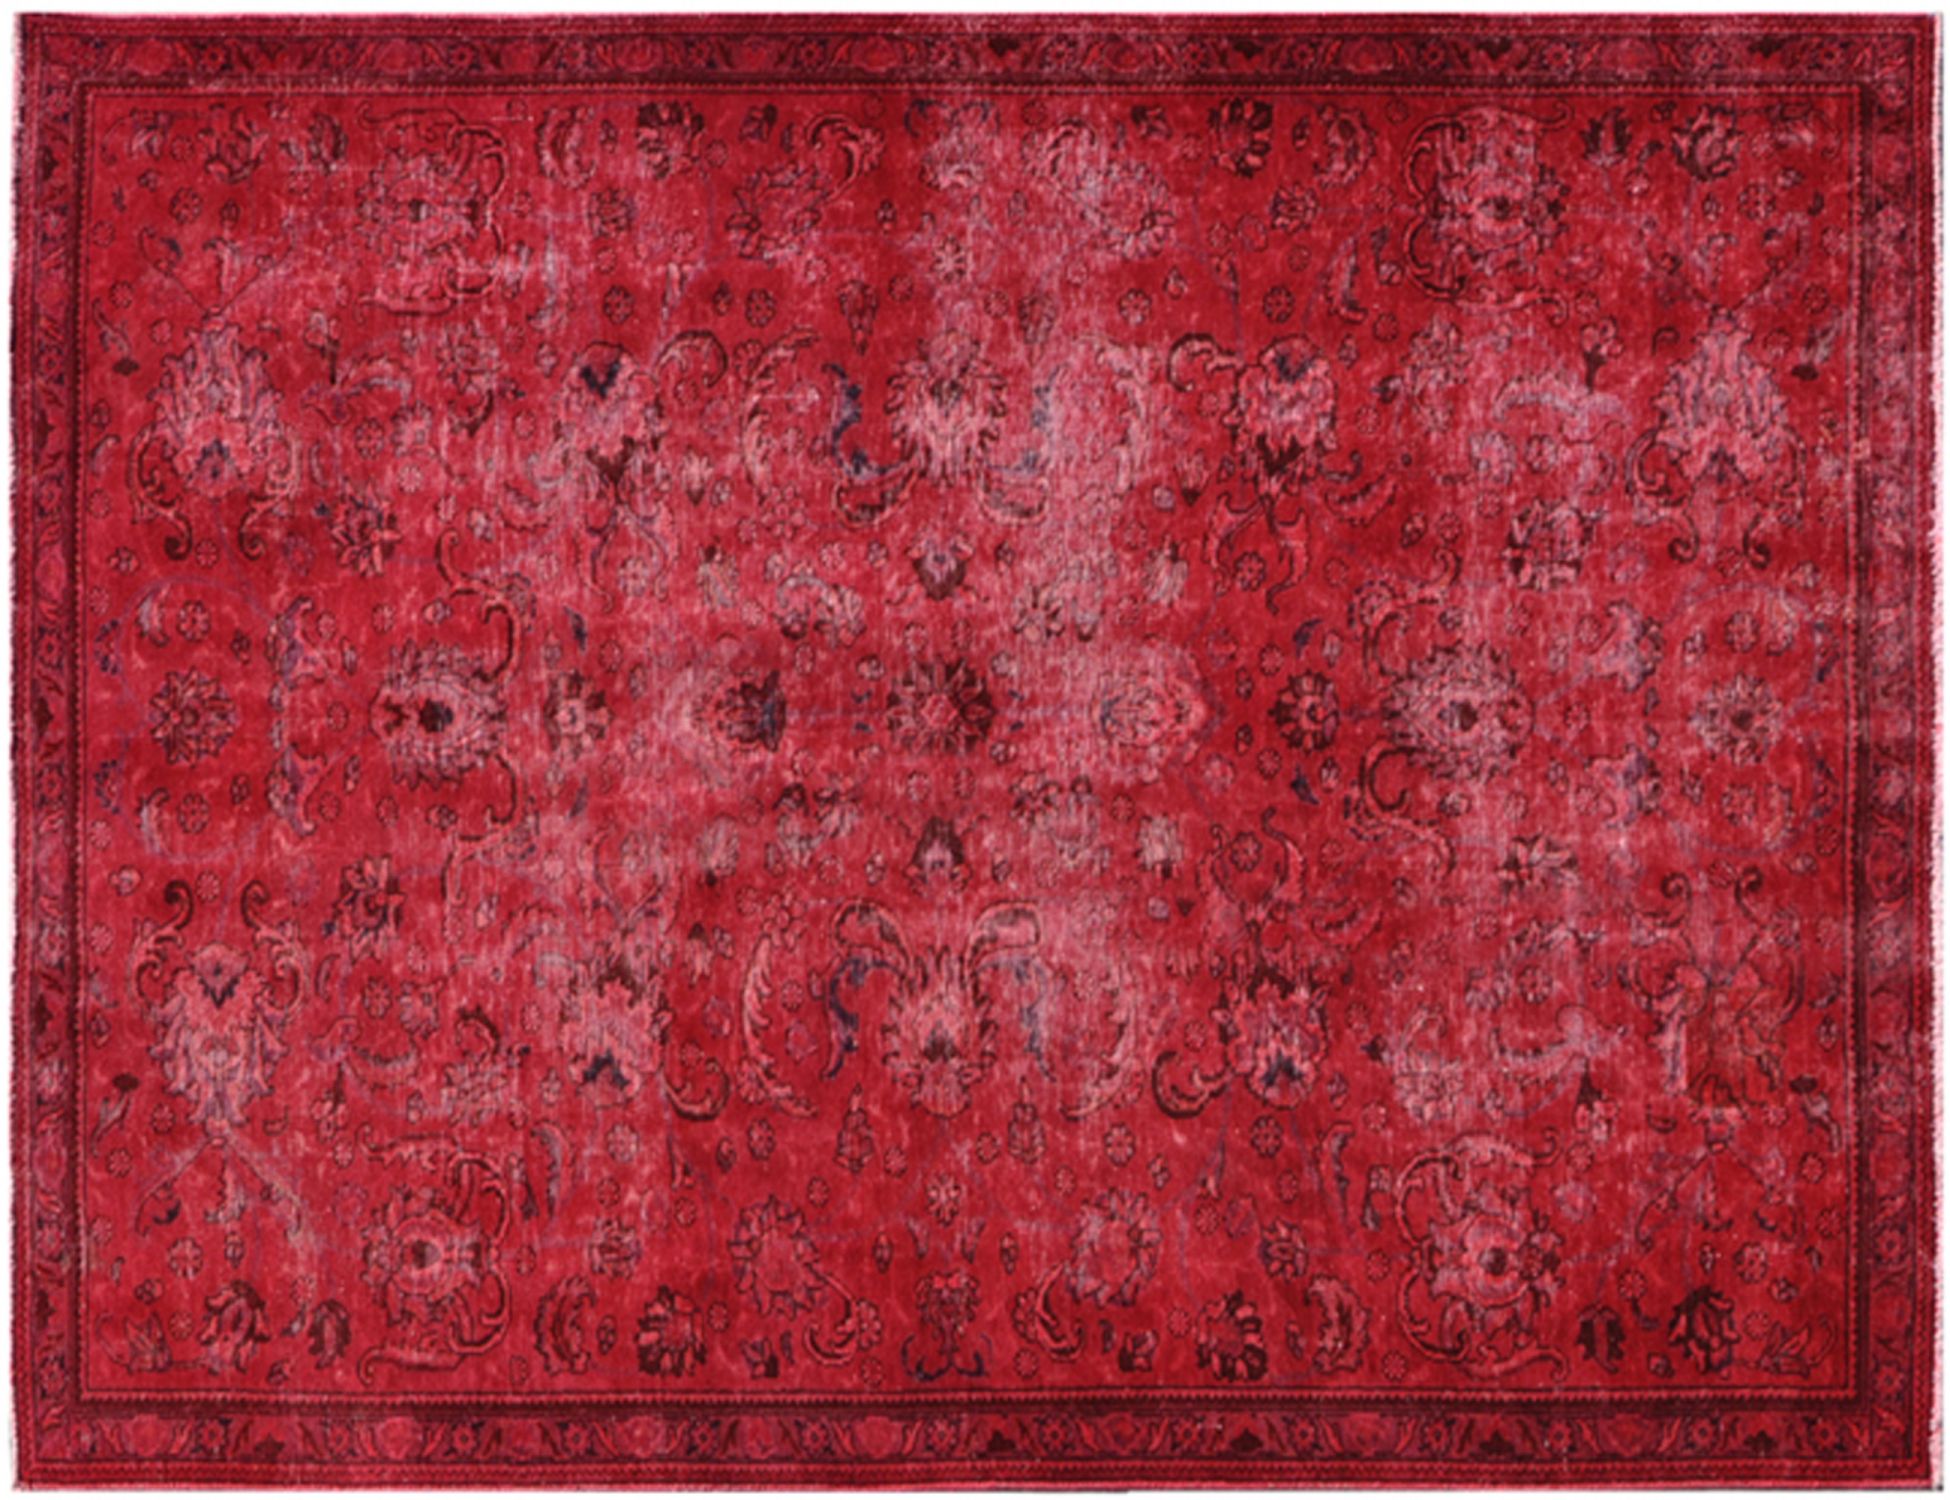  Vintage Tapis  rouge <br/>276 x 178 cm